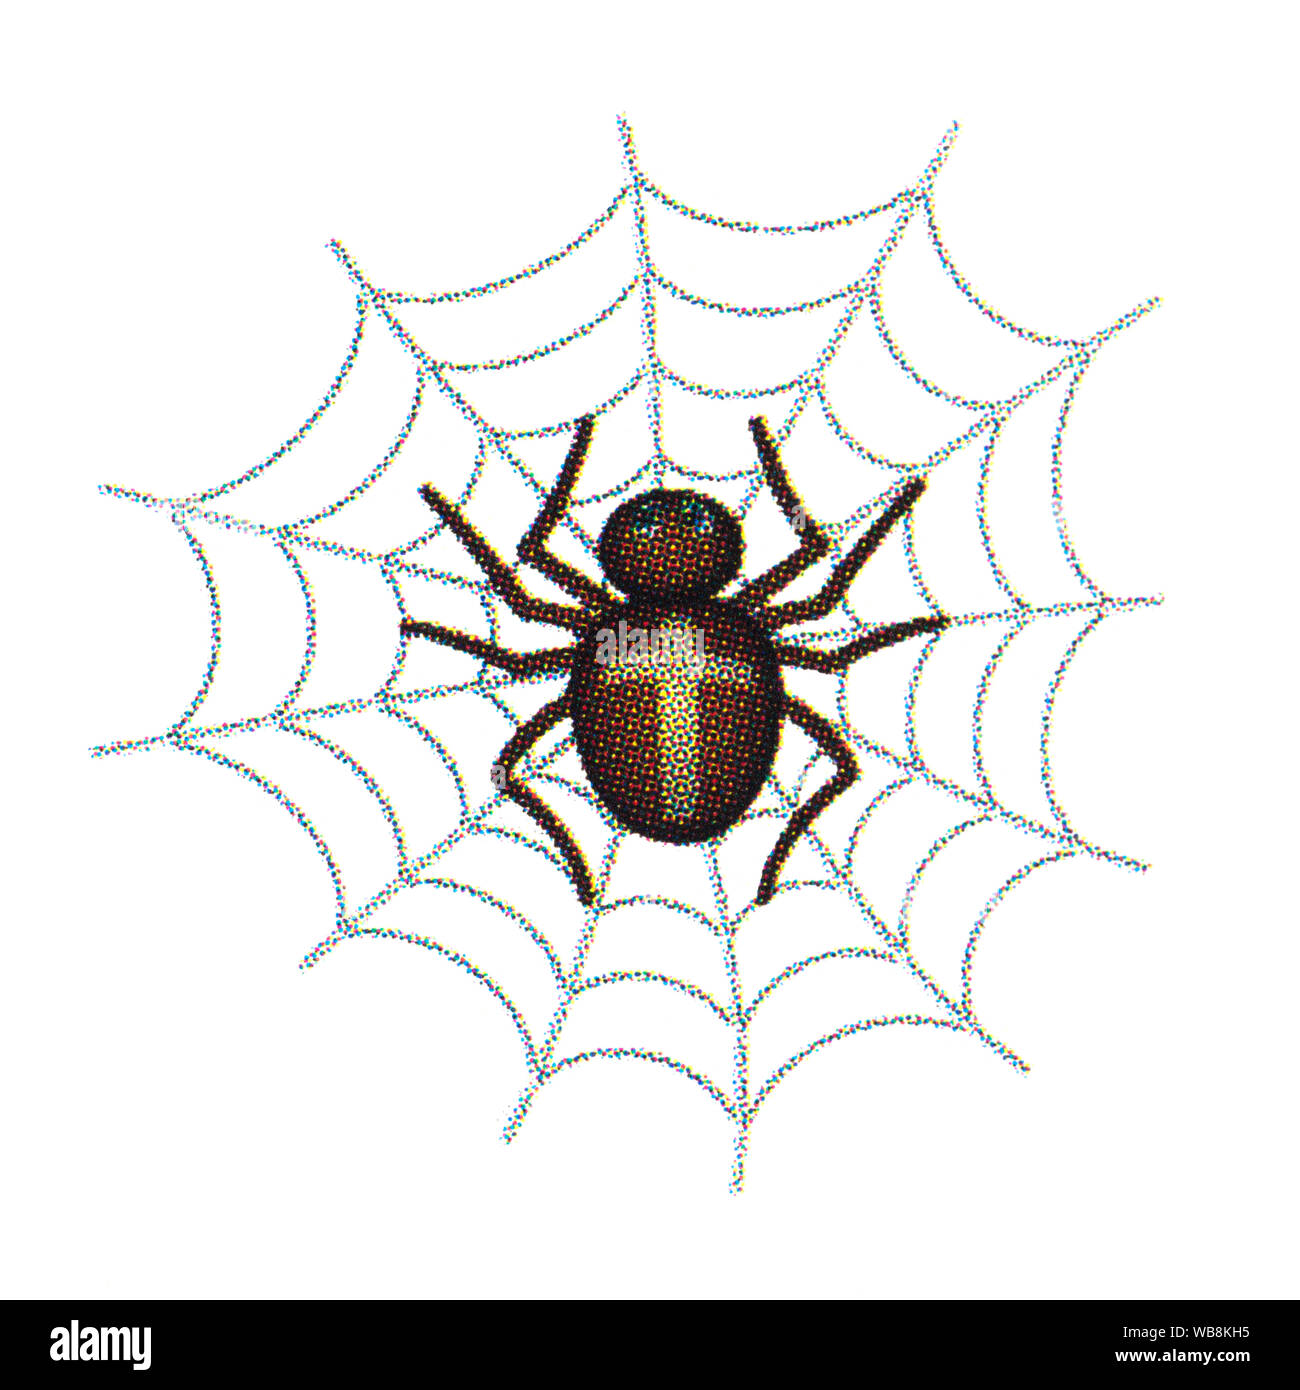 Spider emoticon Stock Photo